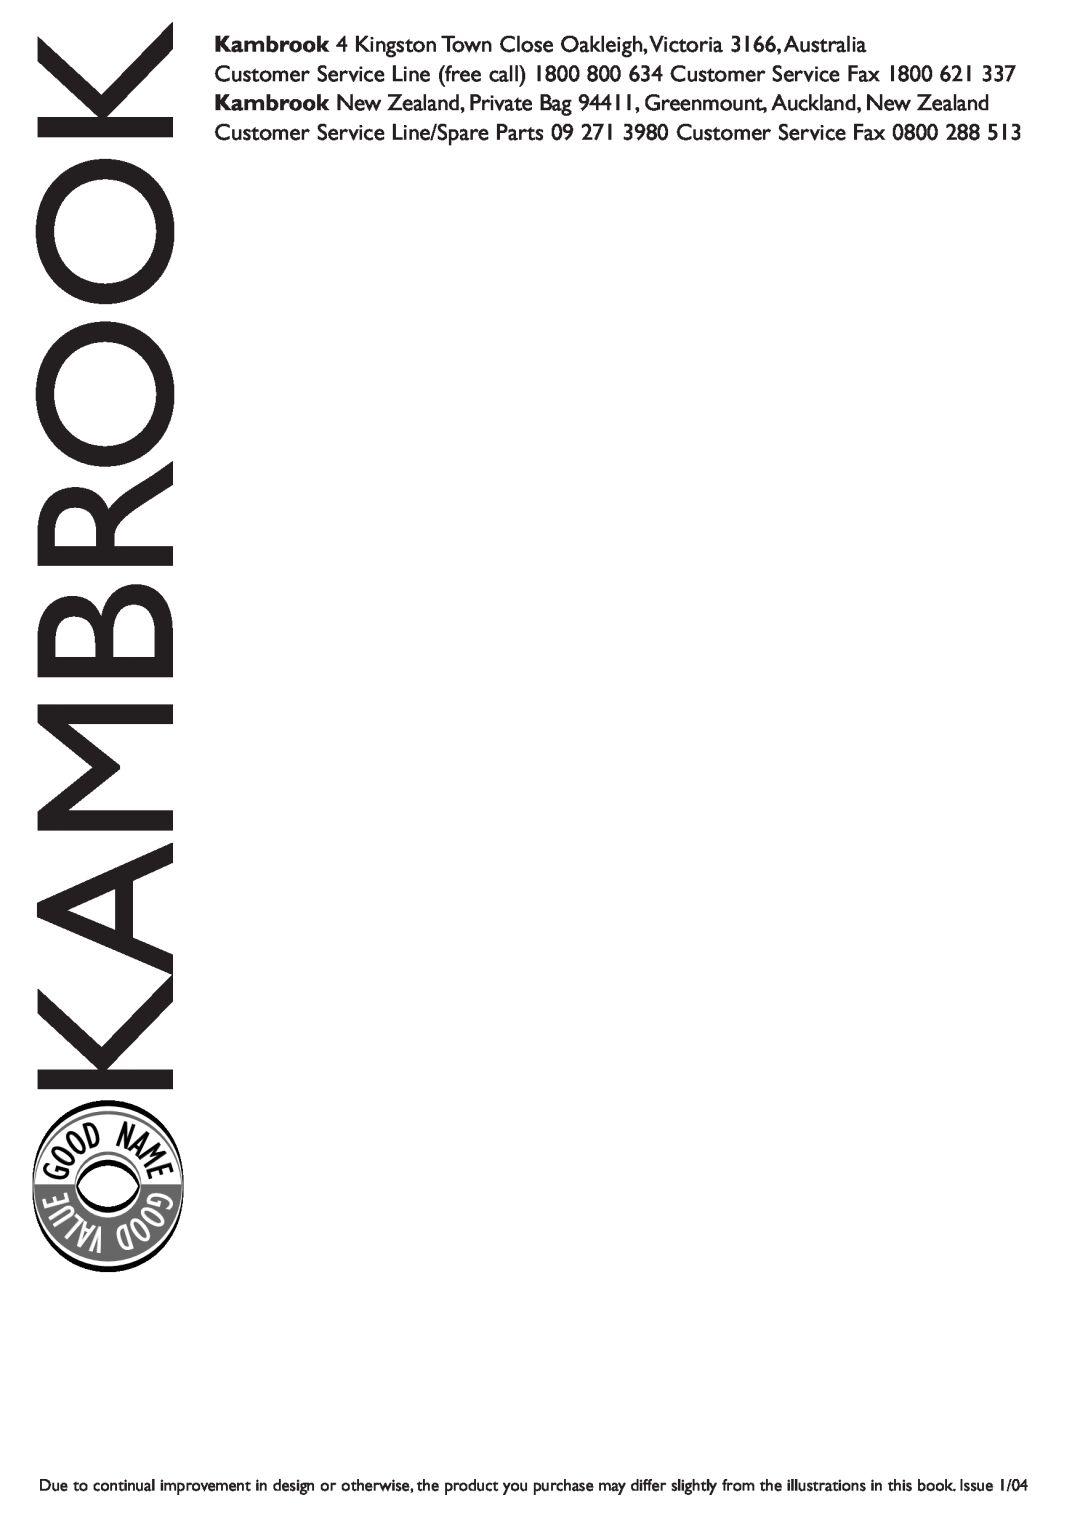 Kambrook KB220 manual U Lav 